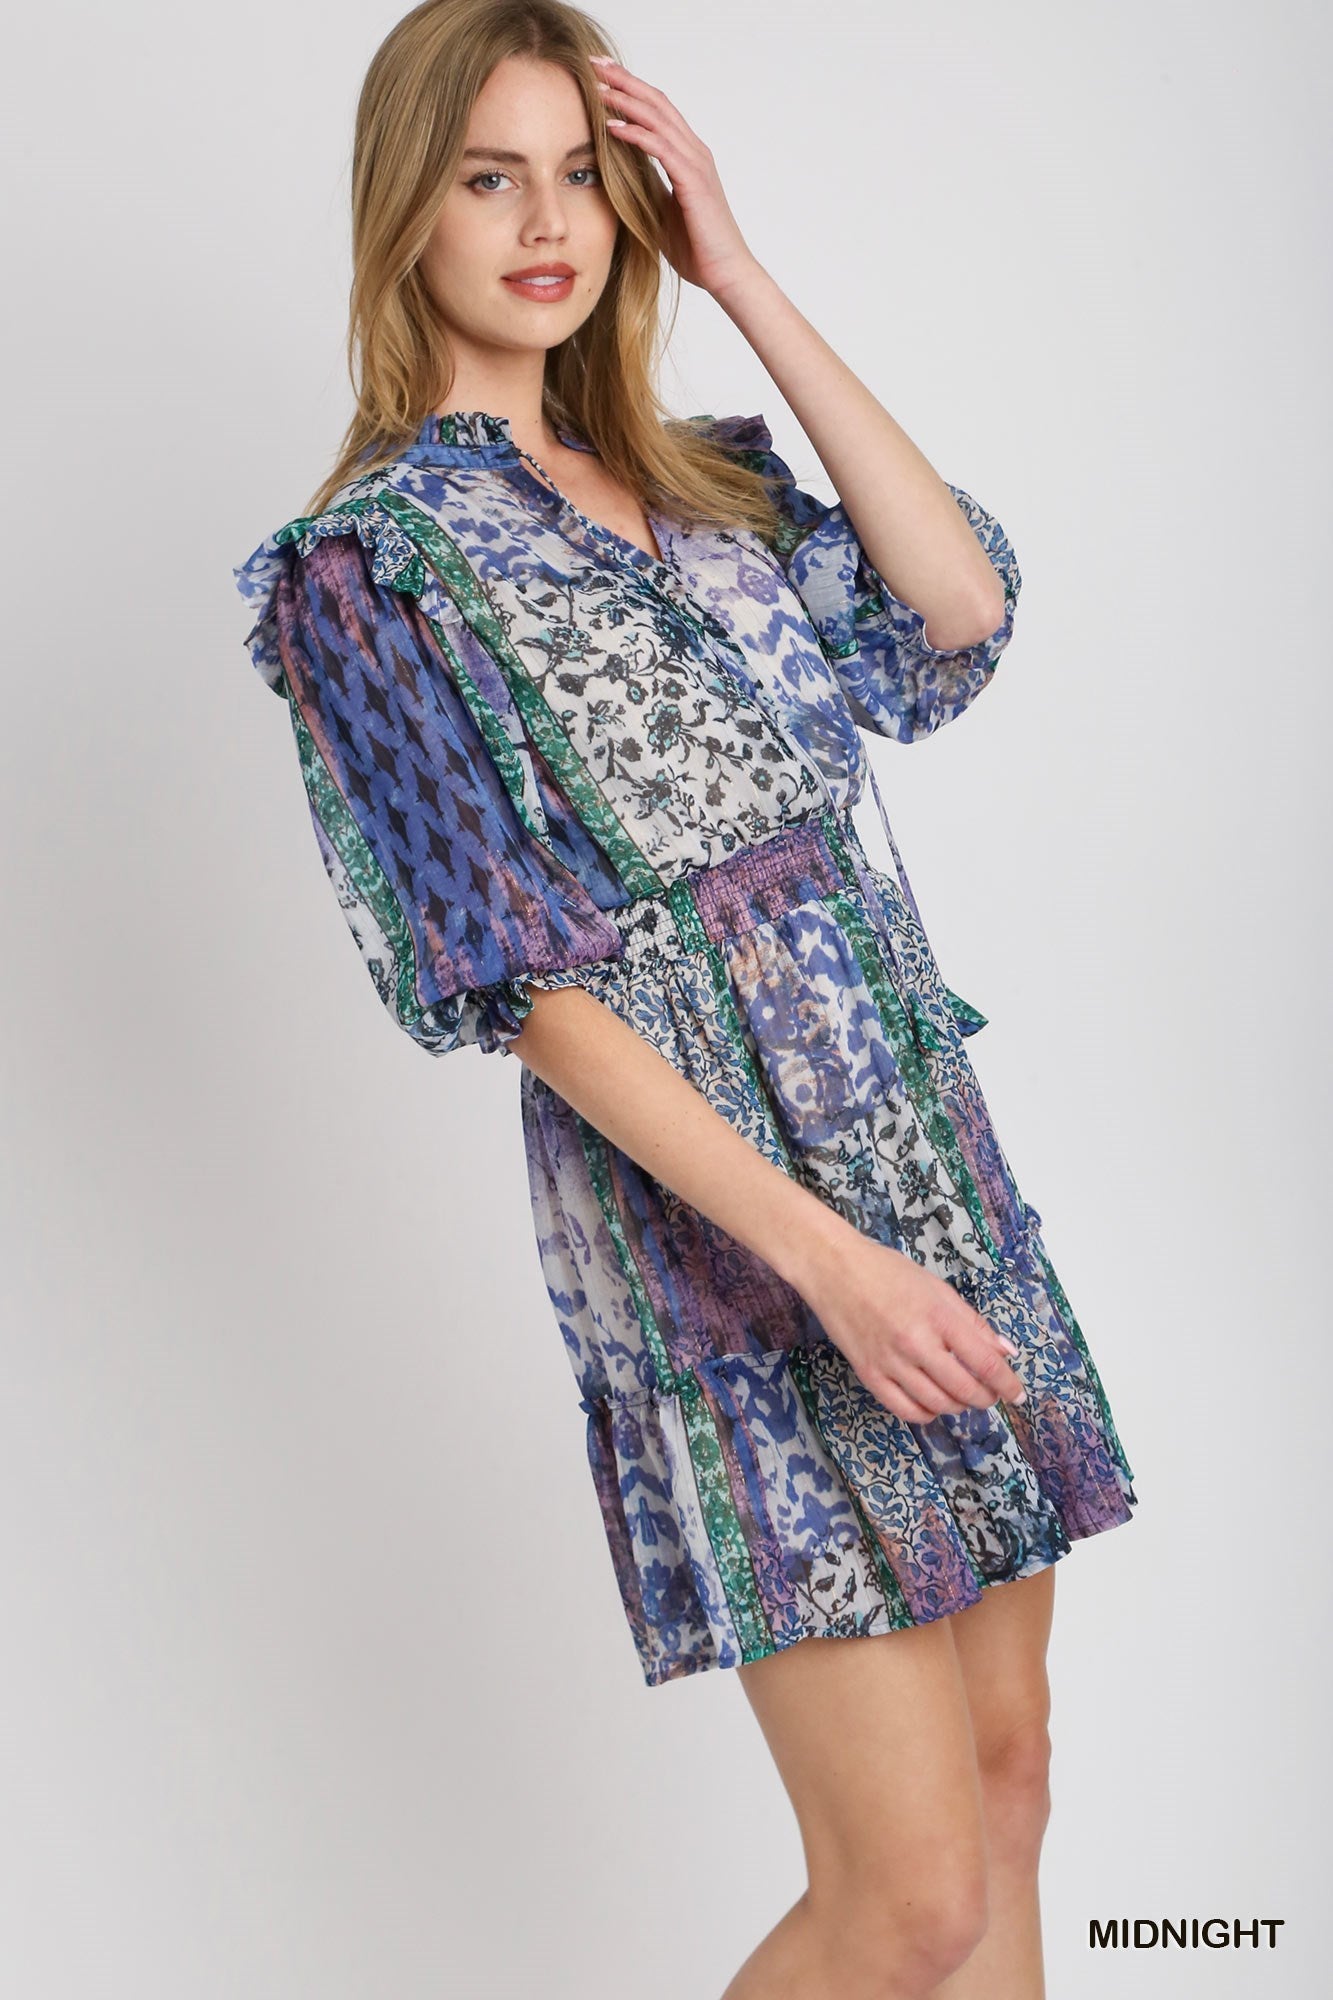 Midnight Multi Print Umgee Ruffle Neckline Dress with Elastic Smocked Waistband Short Pouf Sleeves R0832